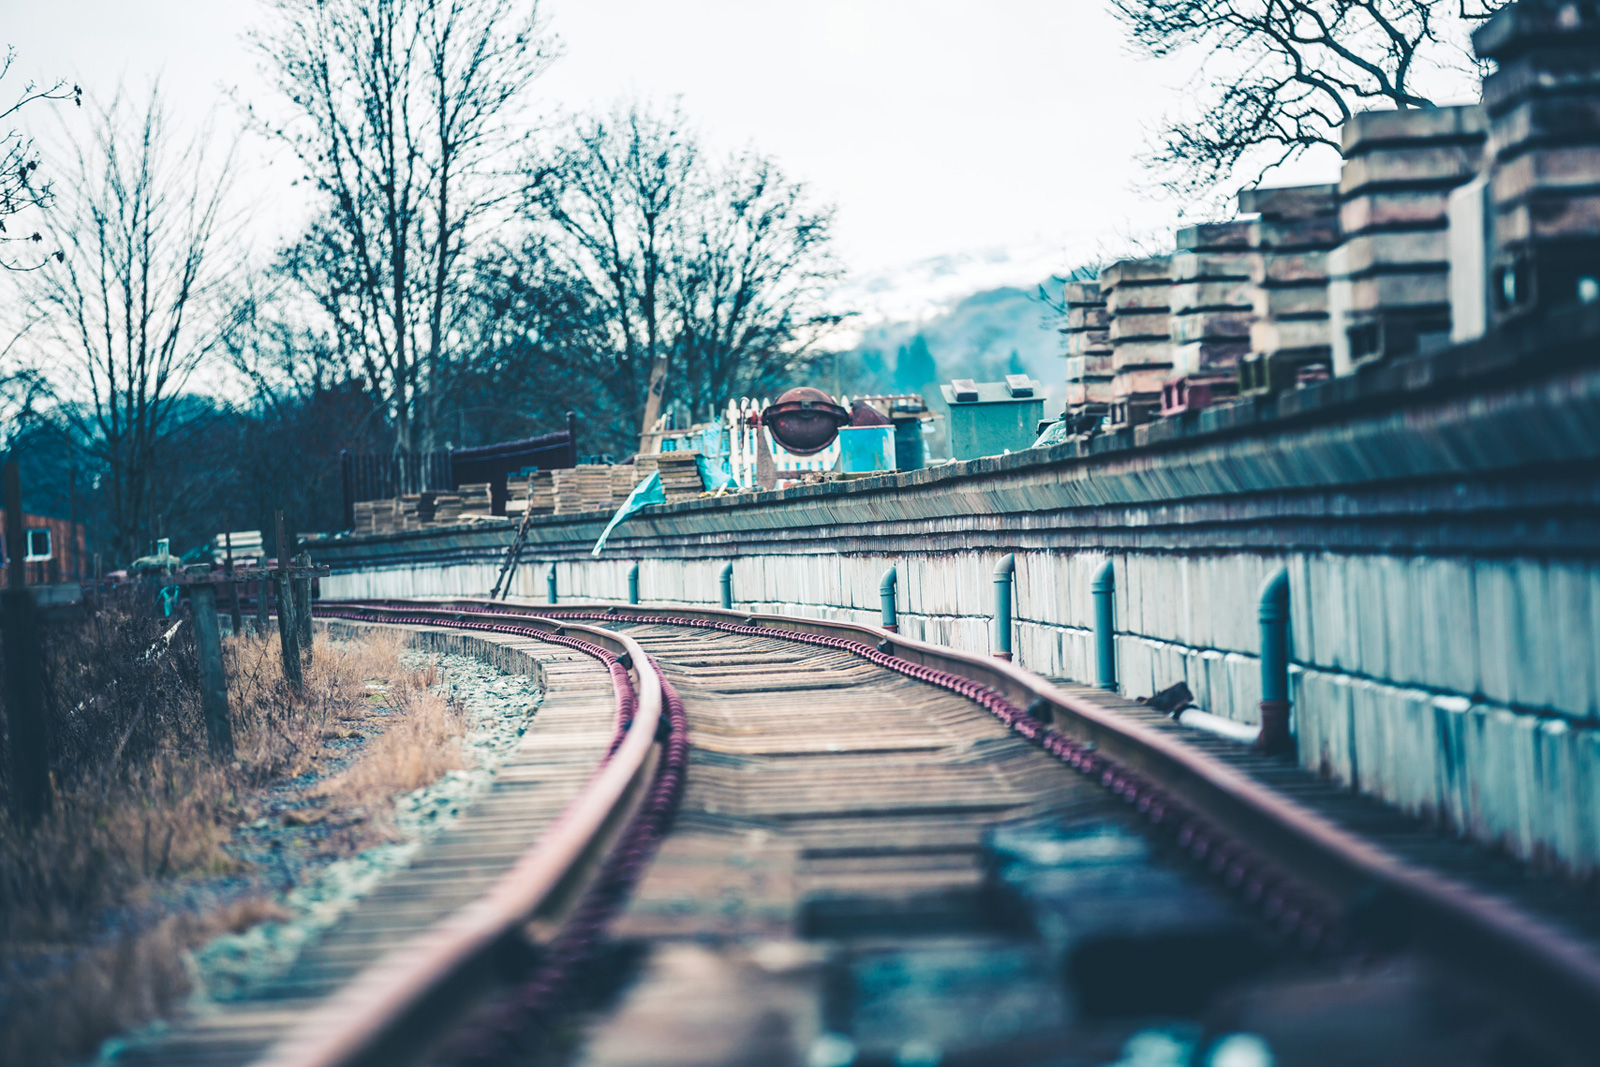 Llangollen Railway track with construction materials on train platform.